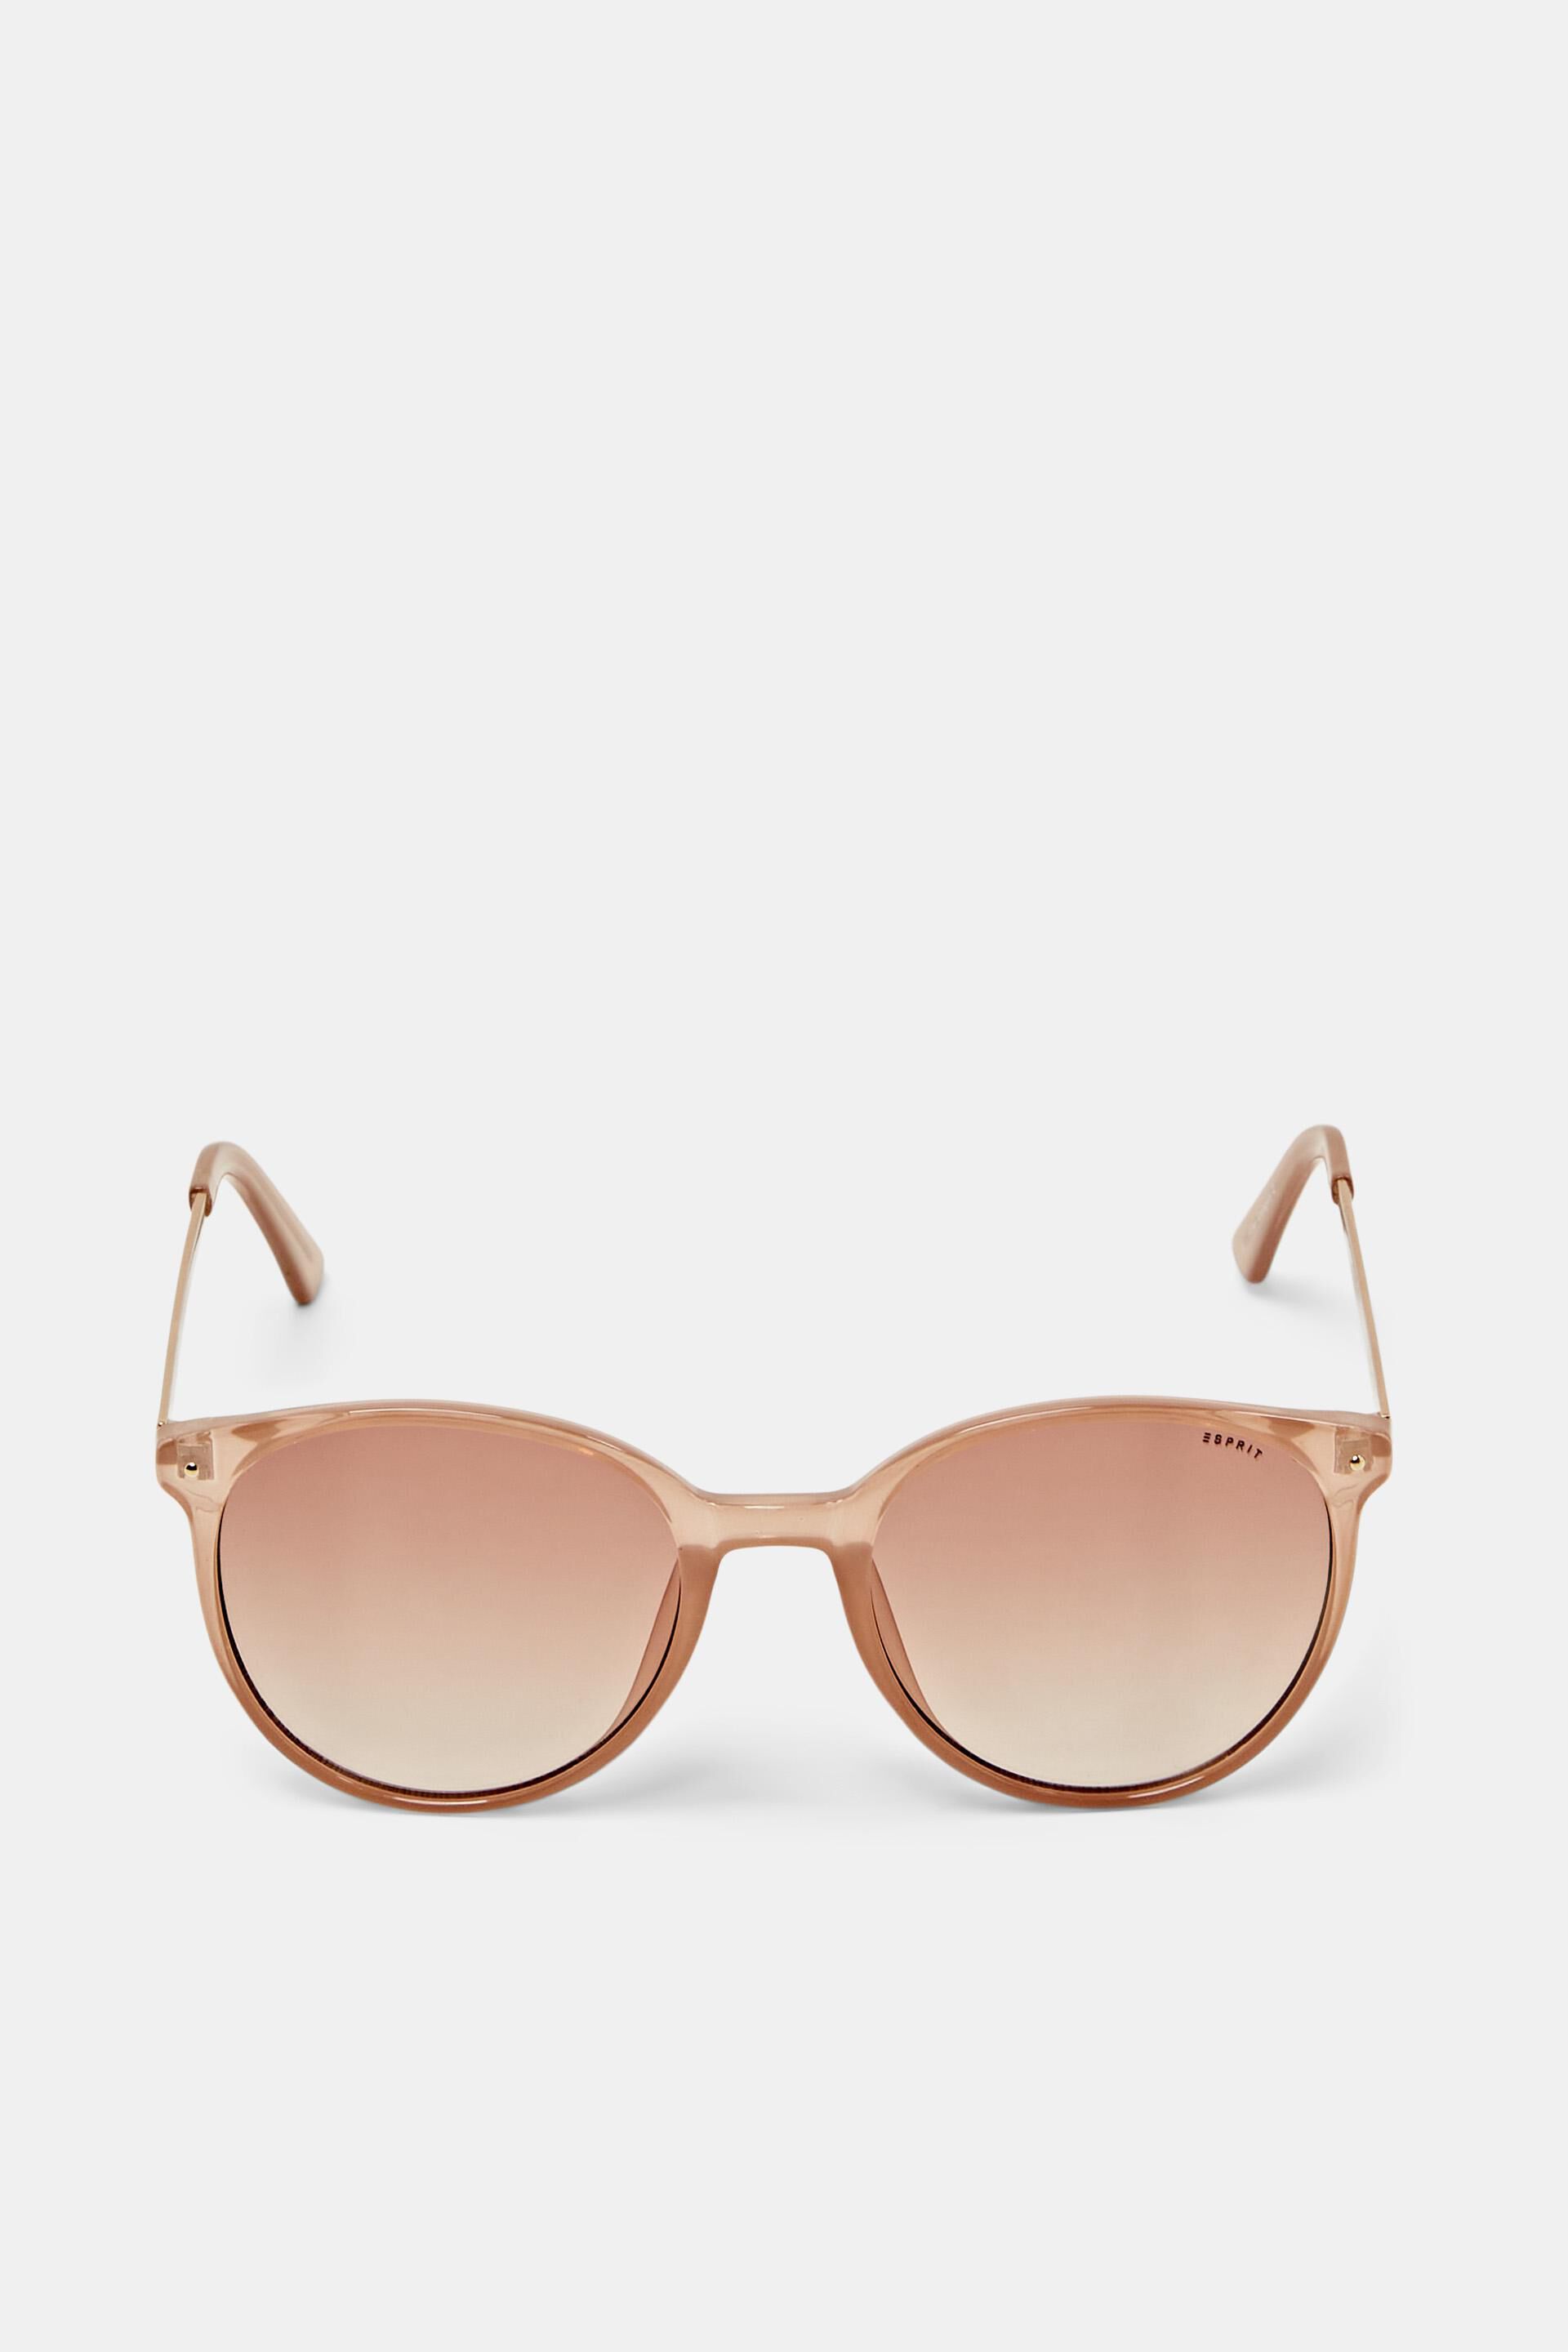 Esprit sunglasses Round framed